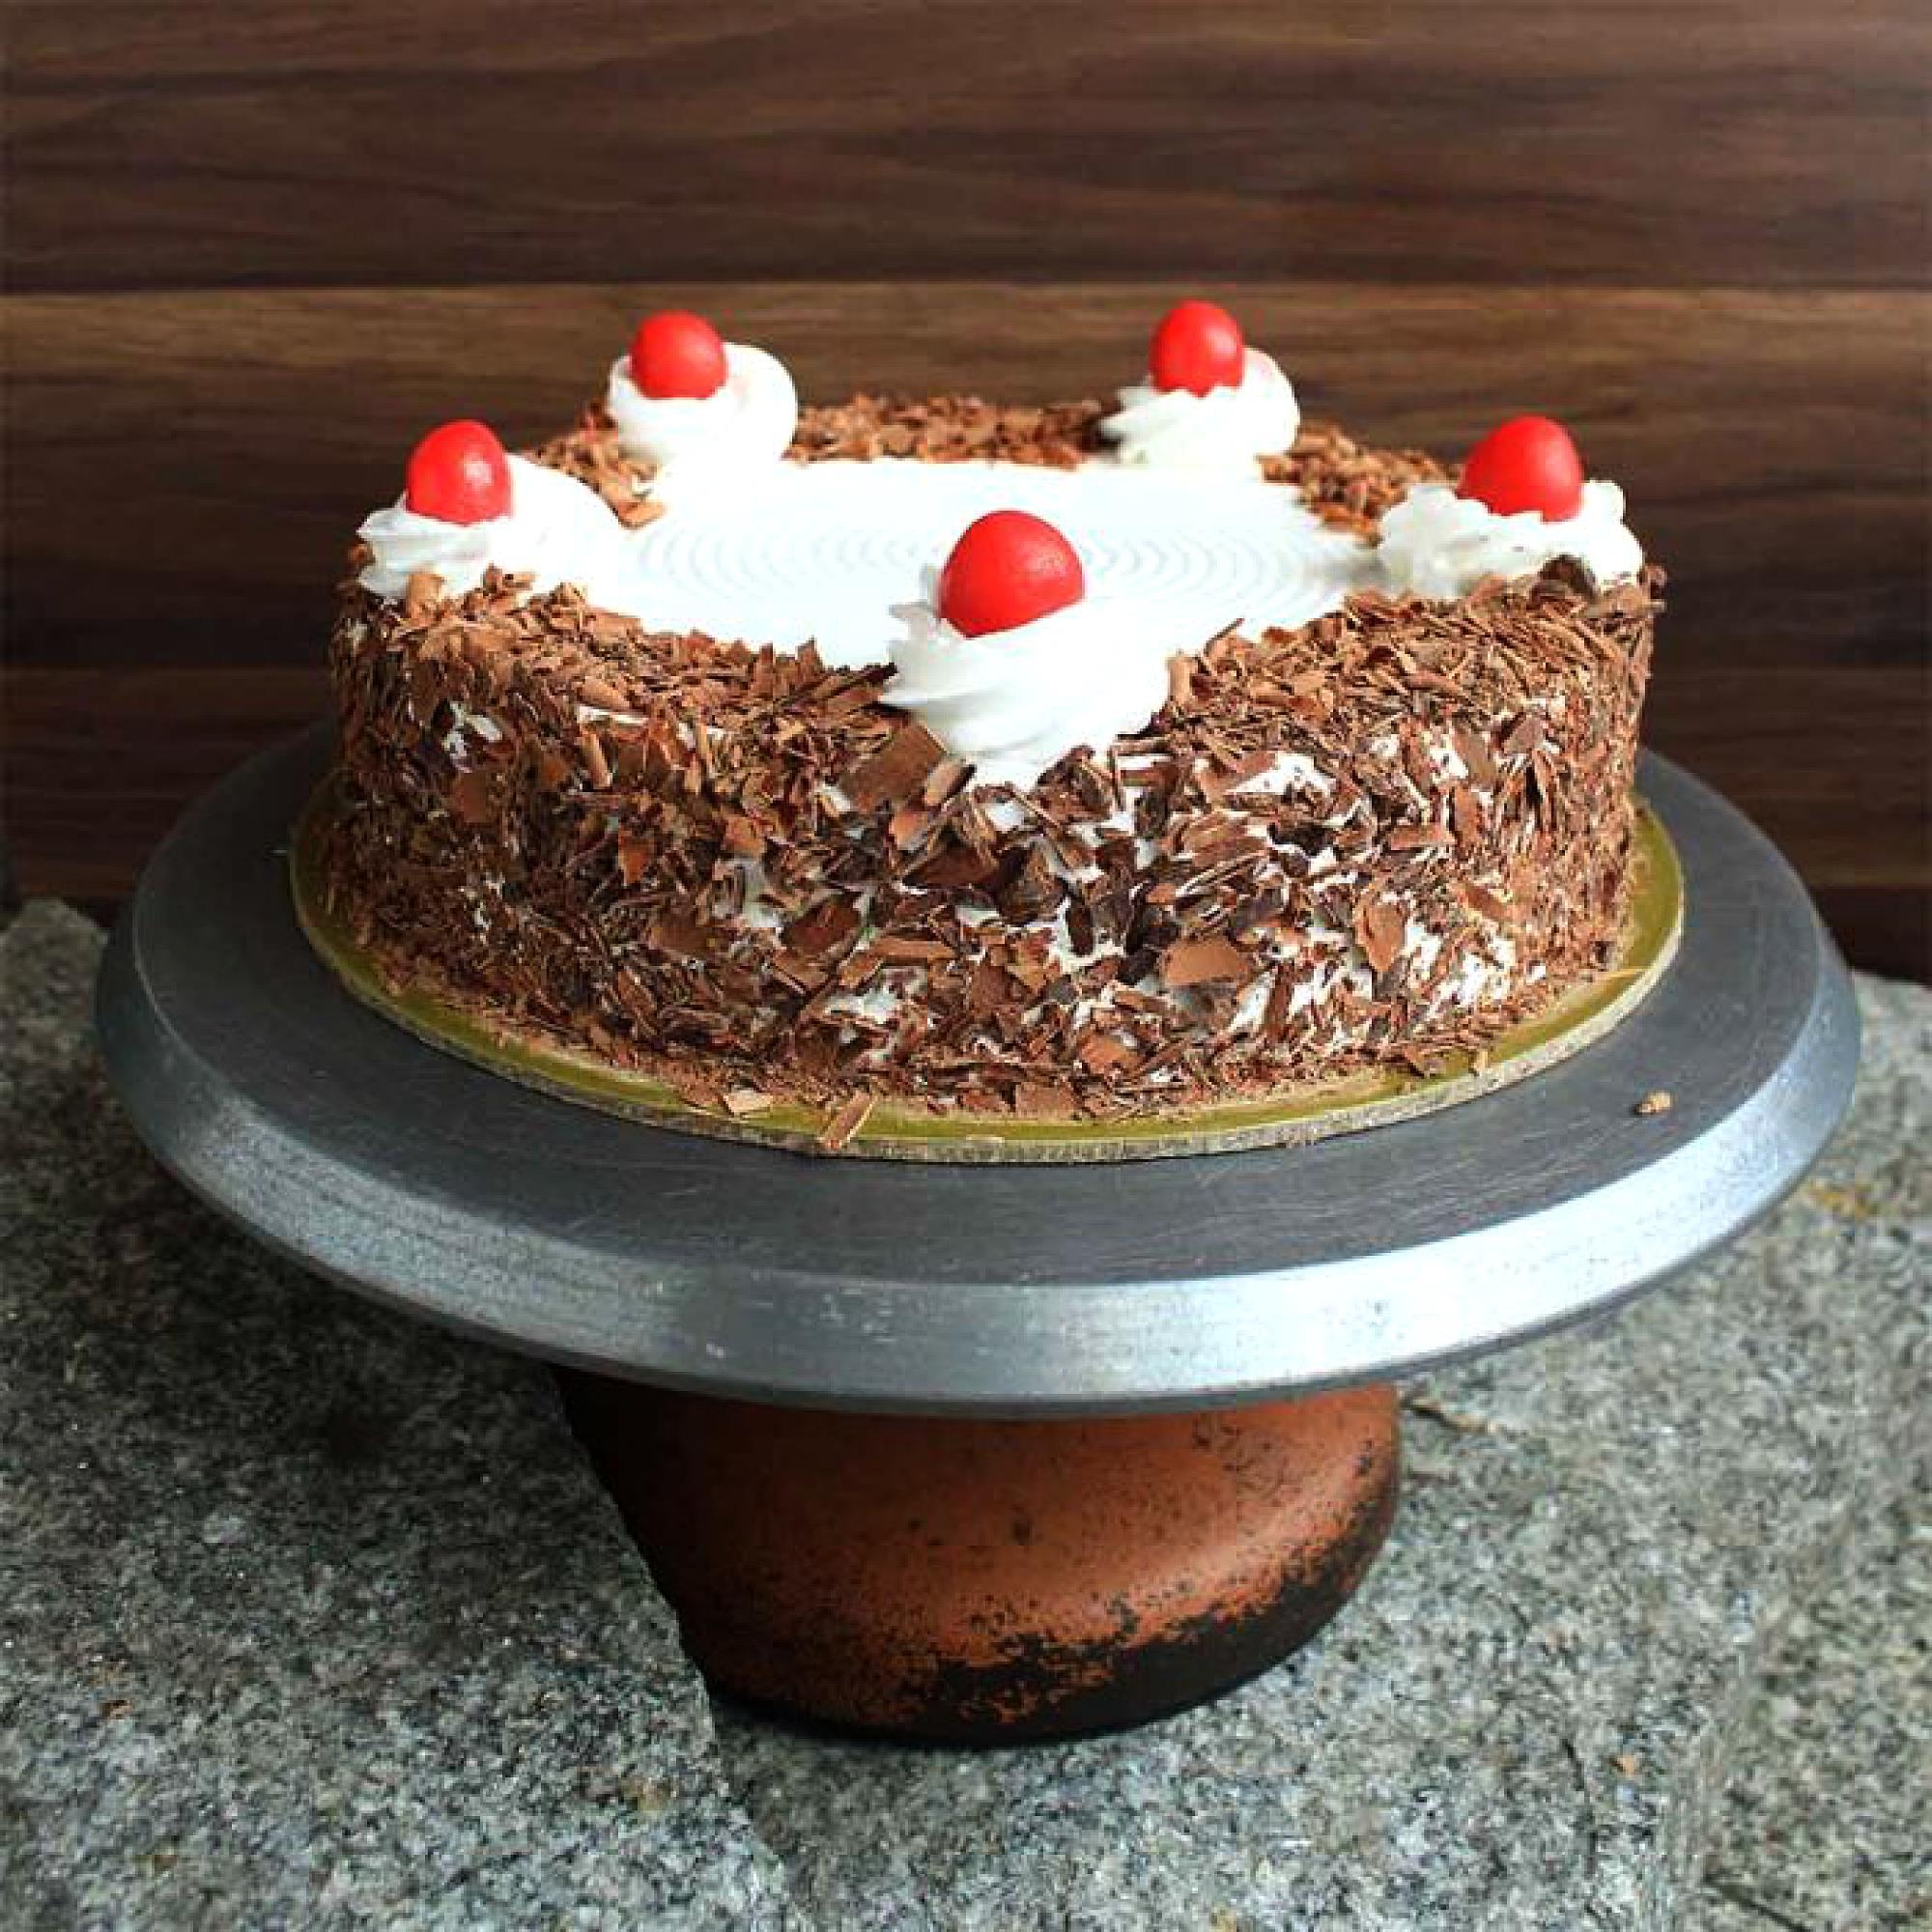 PINE GARDEN] Black Forest Cake | Shopee Singapore